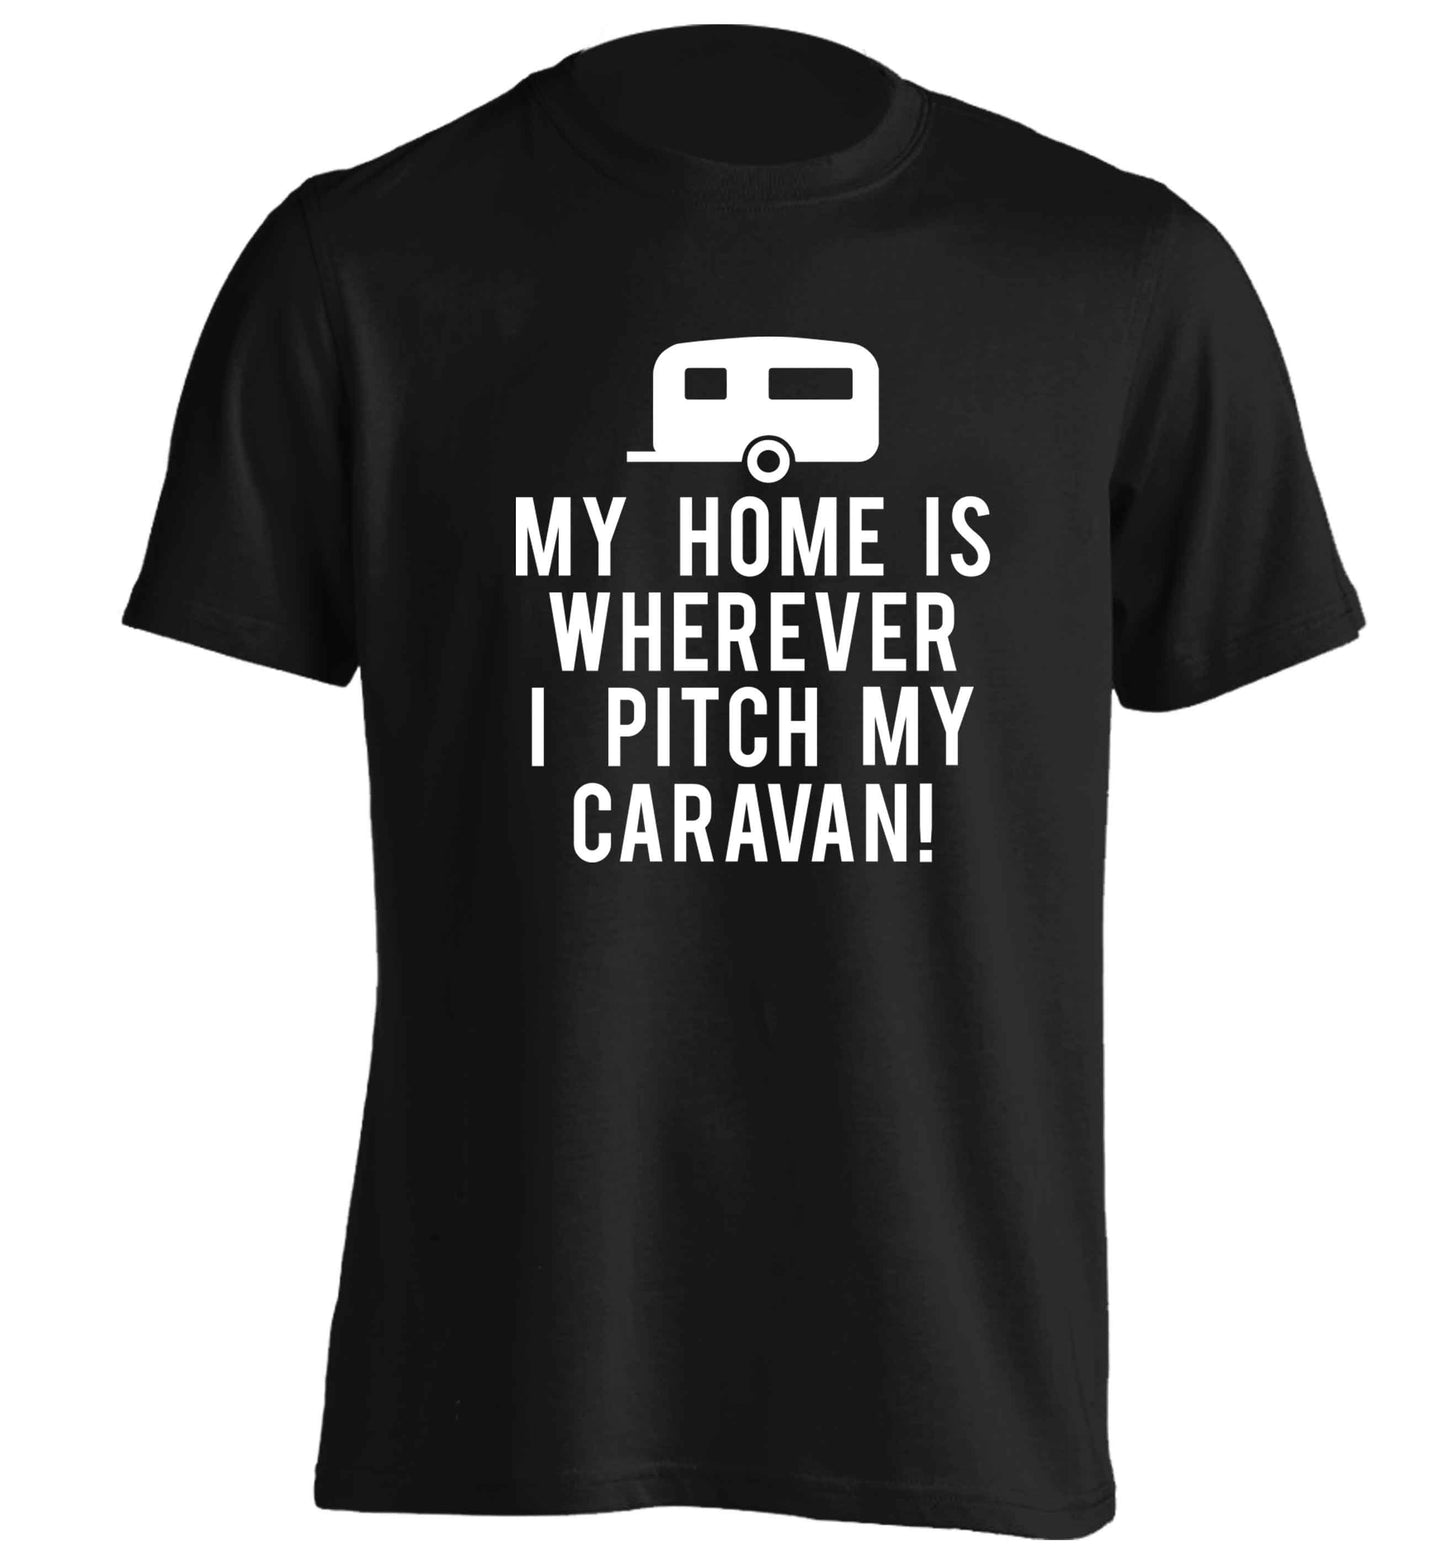 My home is wherever I pitch my caravan adults unisex black Tshirt 2XL